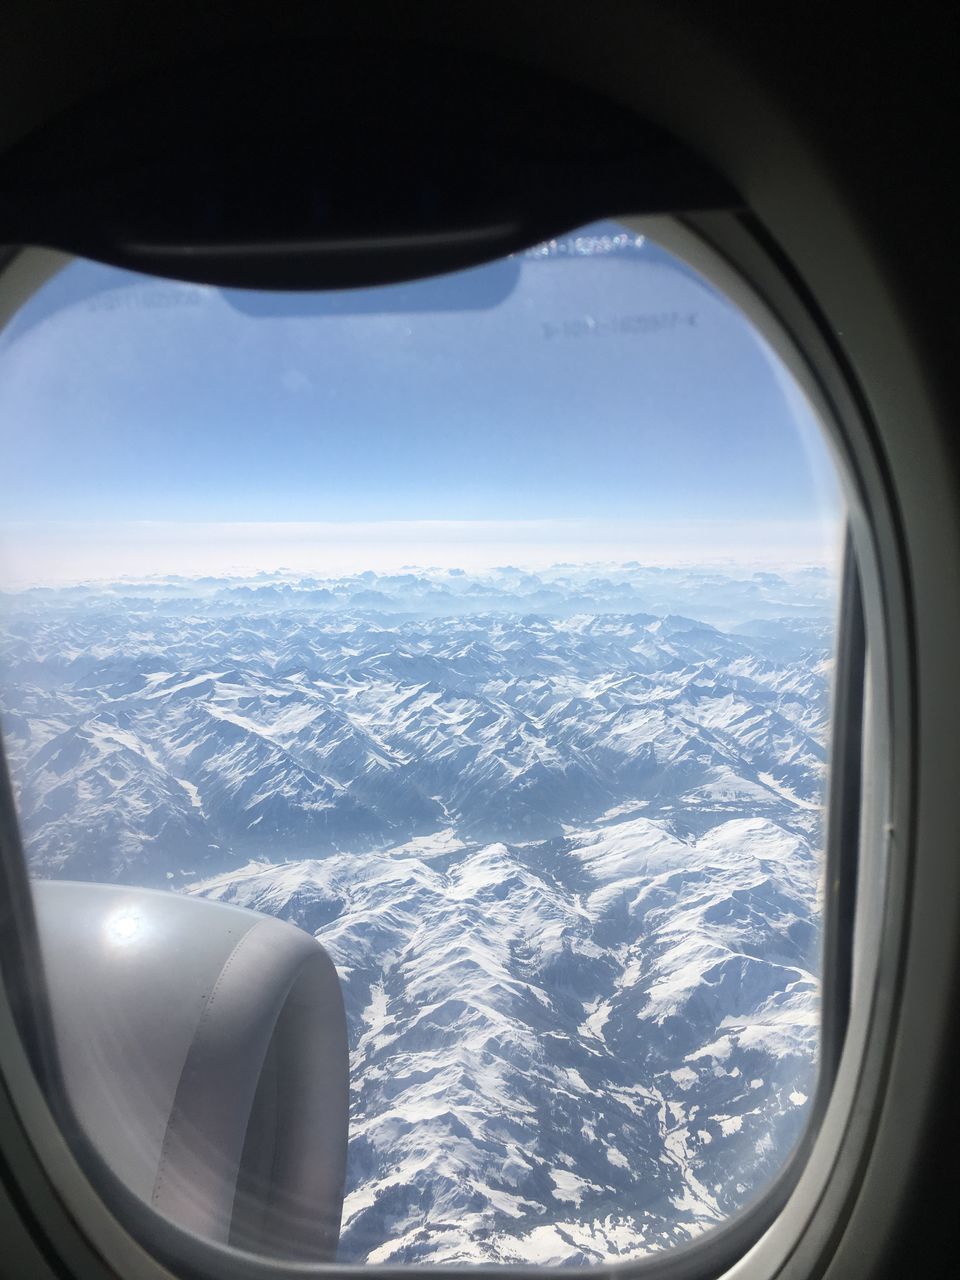 AERIAL VIEW OF MOUNTAINS SEEN THROUGH AIRPLANE WINDOW